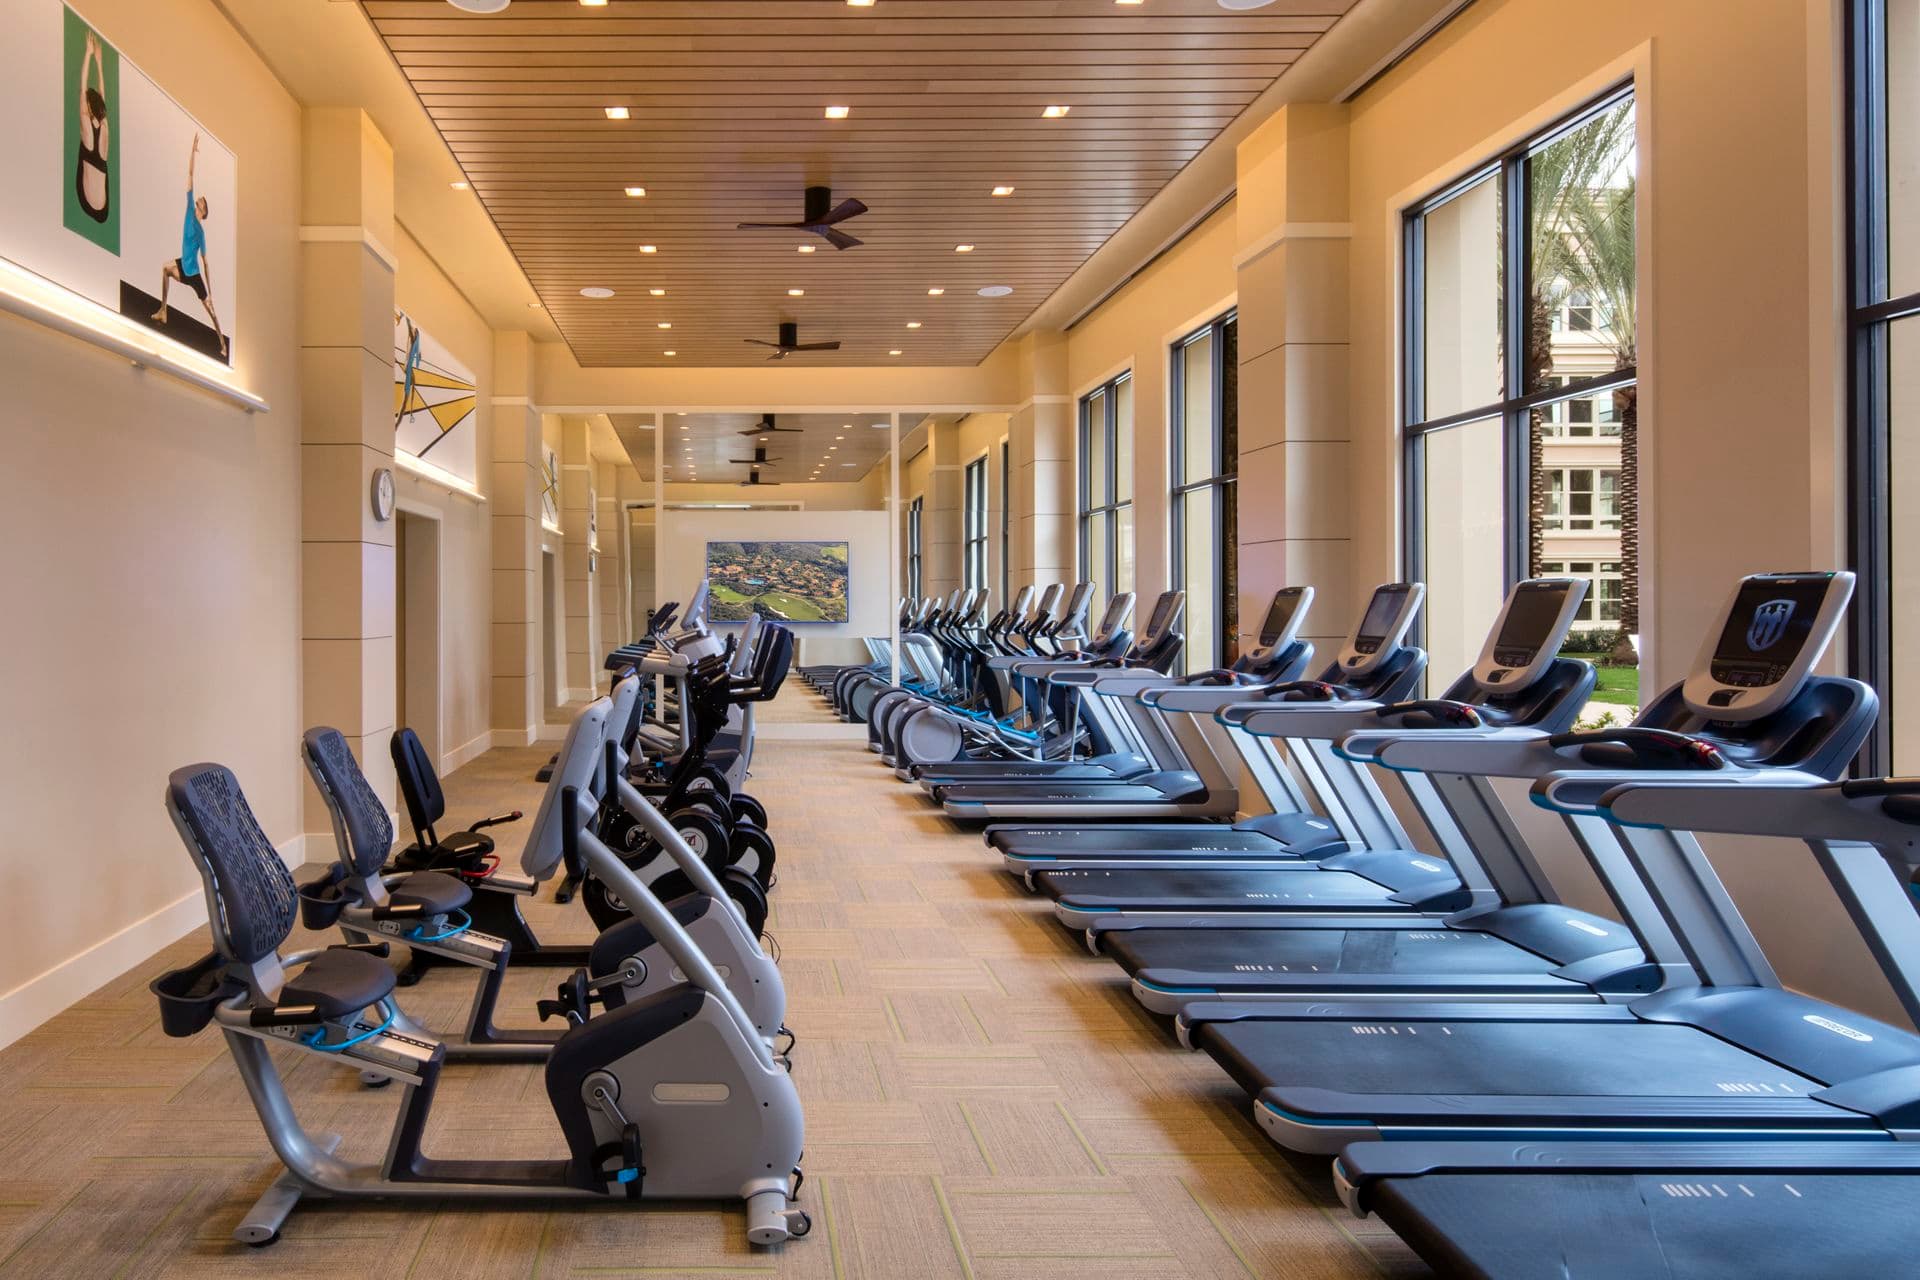 Interior view of fitness center at Villas Fashion Island Apartment Homes in Newport Beach, CA.